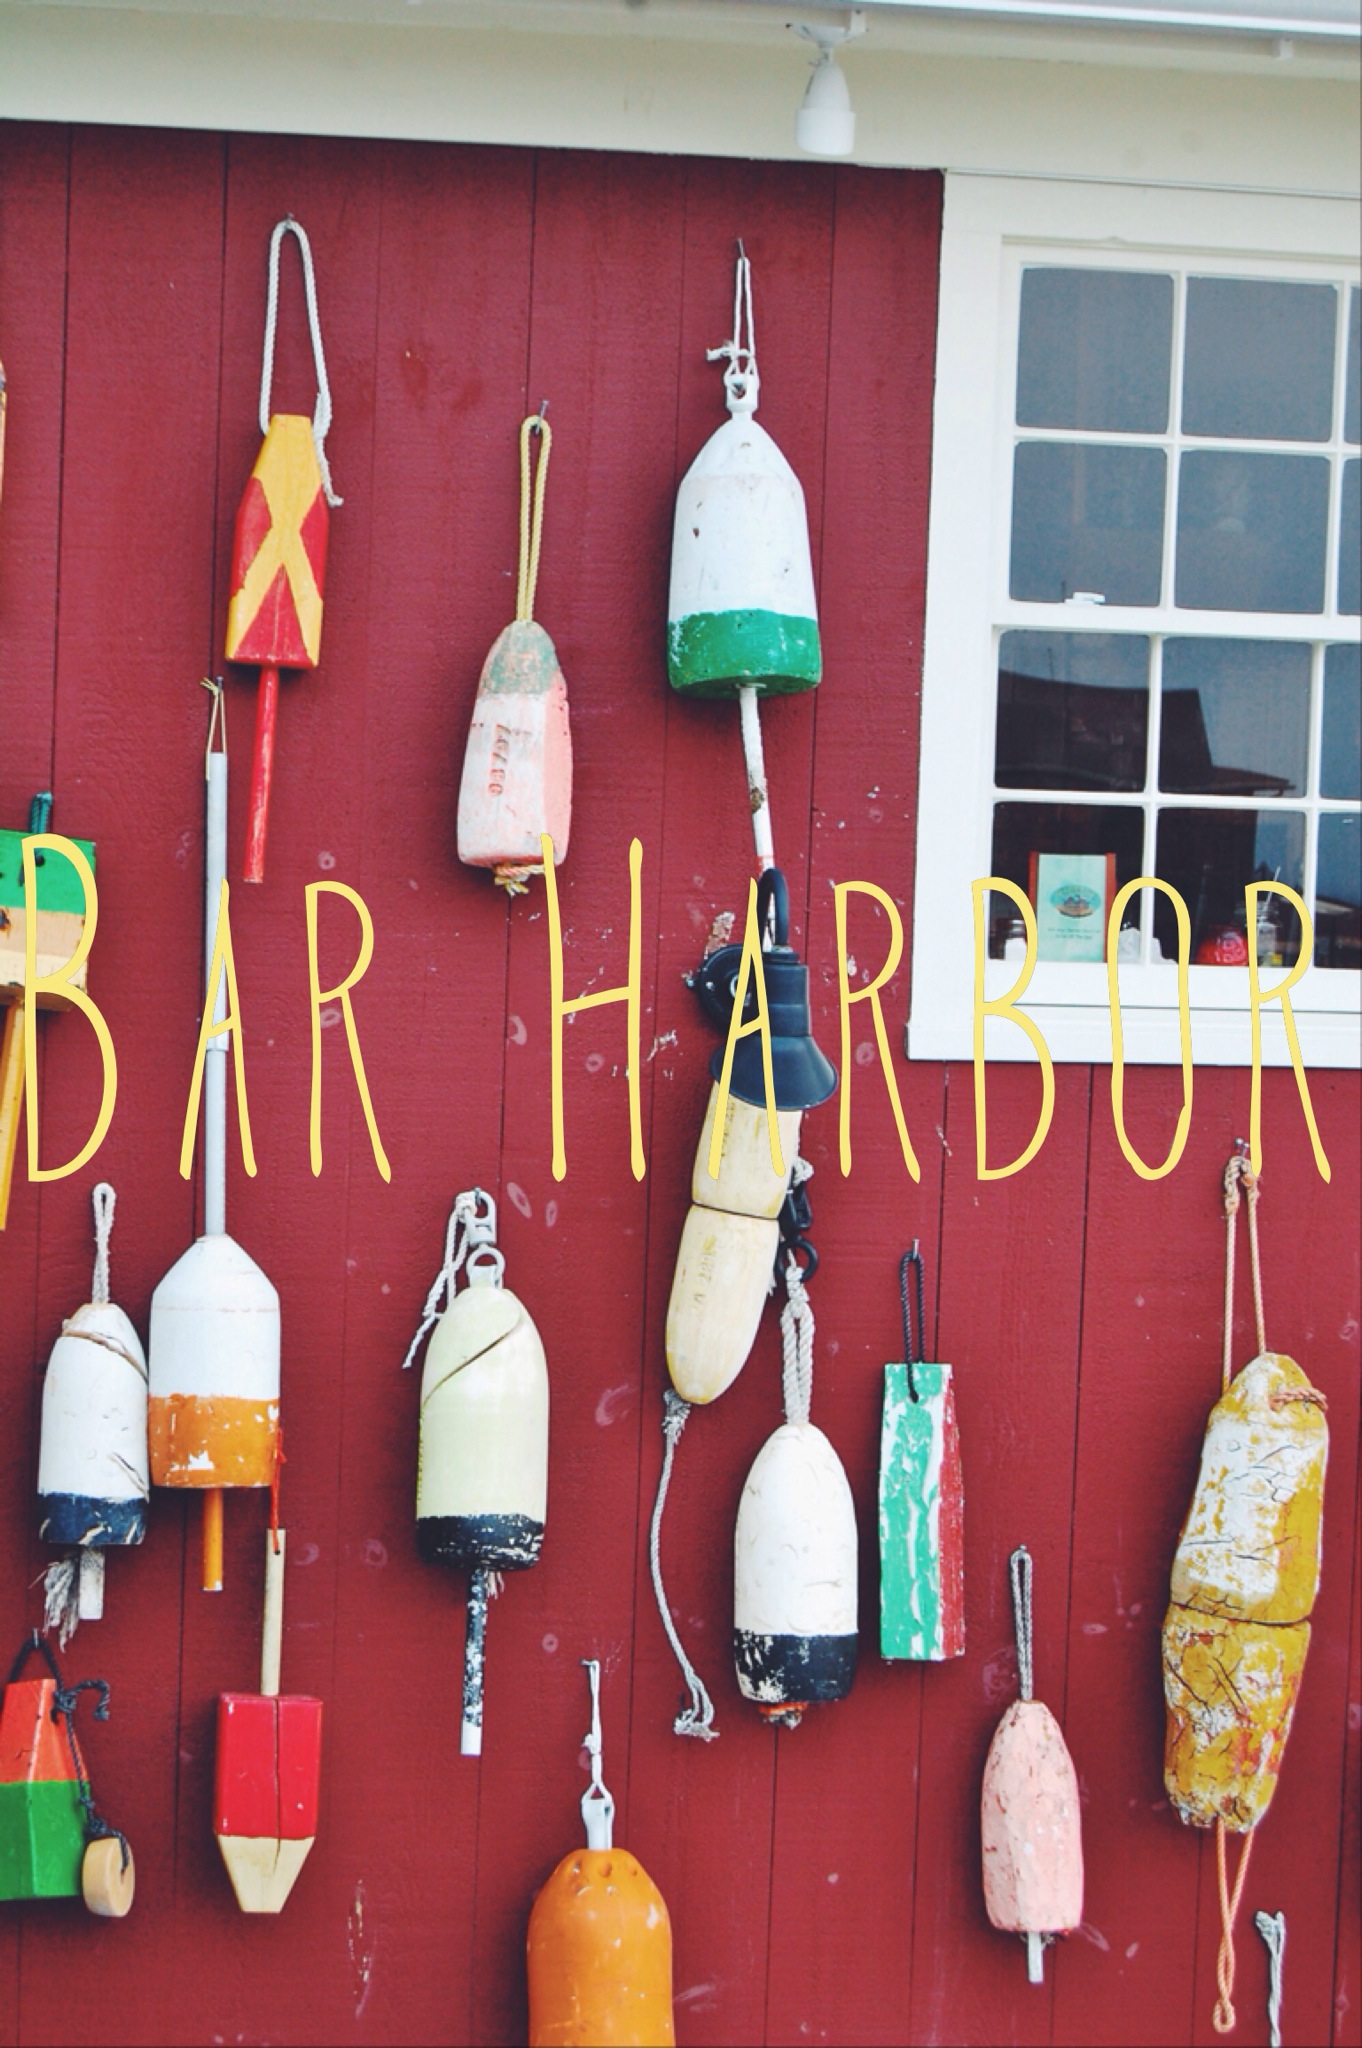 Bar Harbor Travel Guide